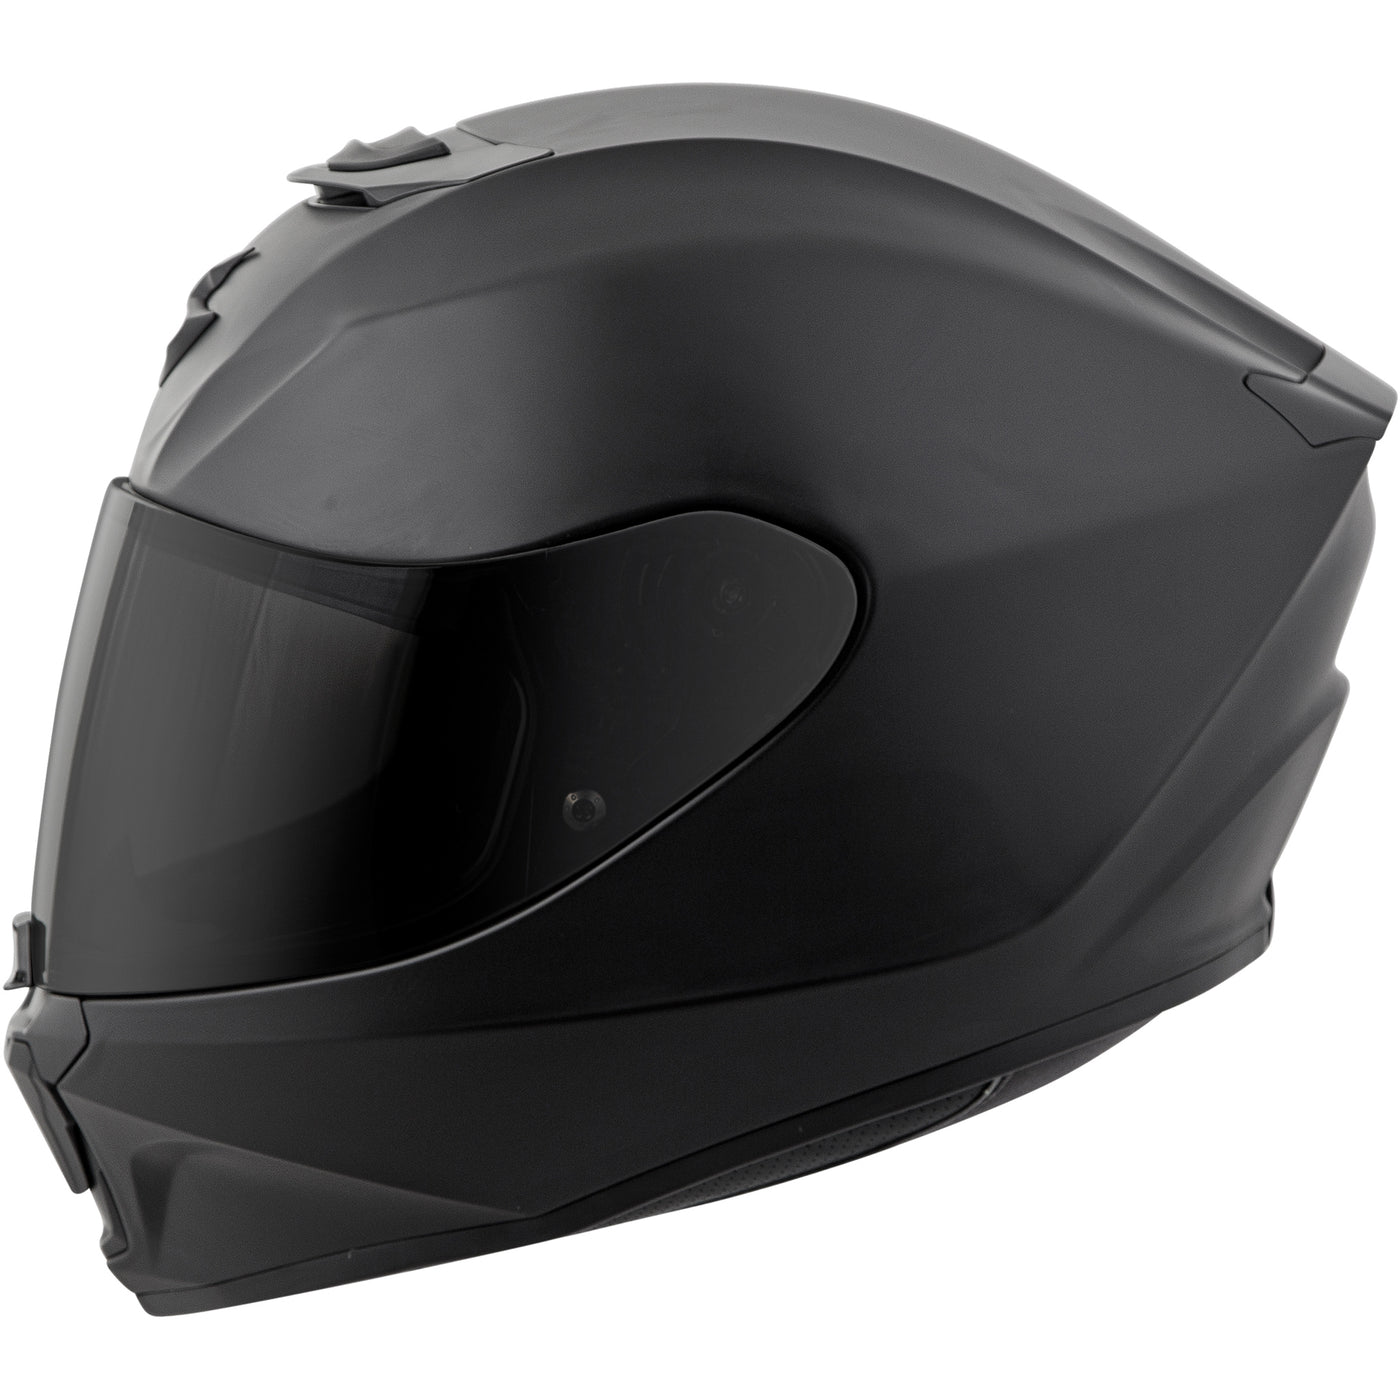 SCORPION EXO EXO-R420 Solid Helmet